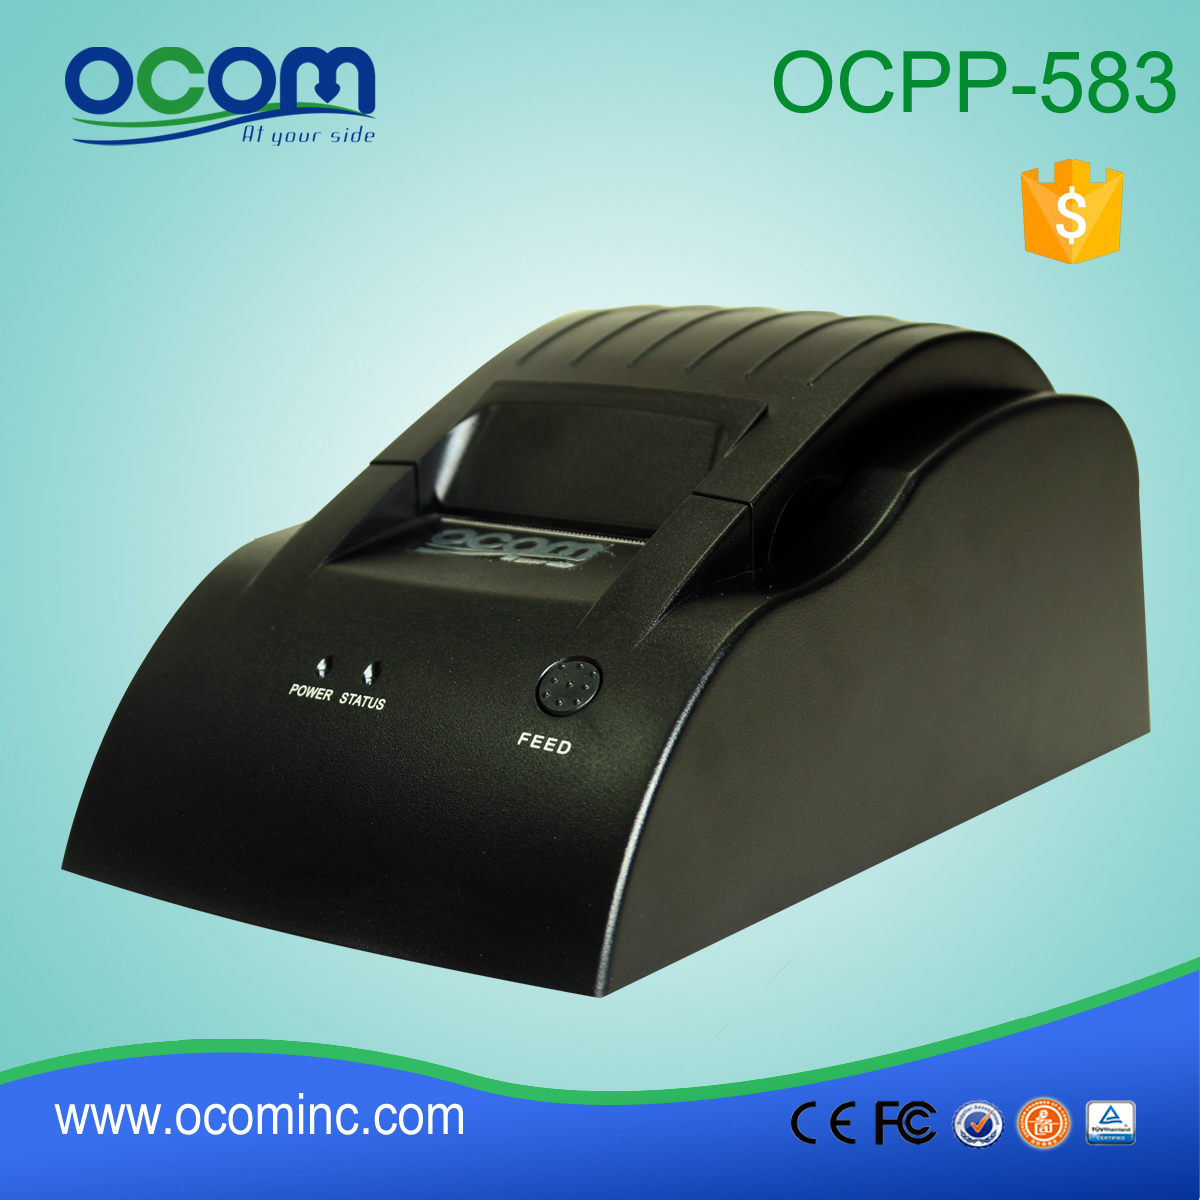 OCPP-583-L Interfaz LAN para impresora de recibos POS de 58 mm de escritorio